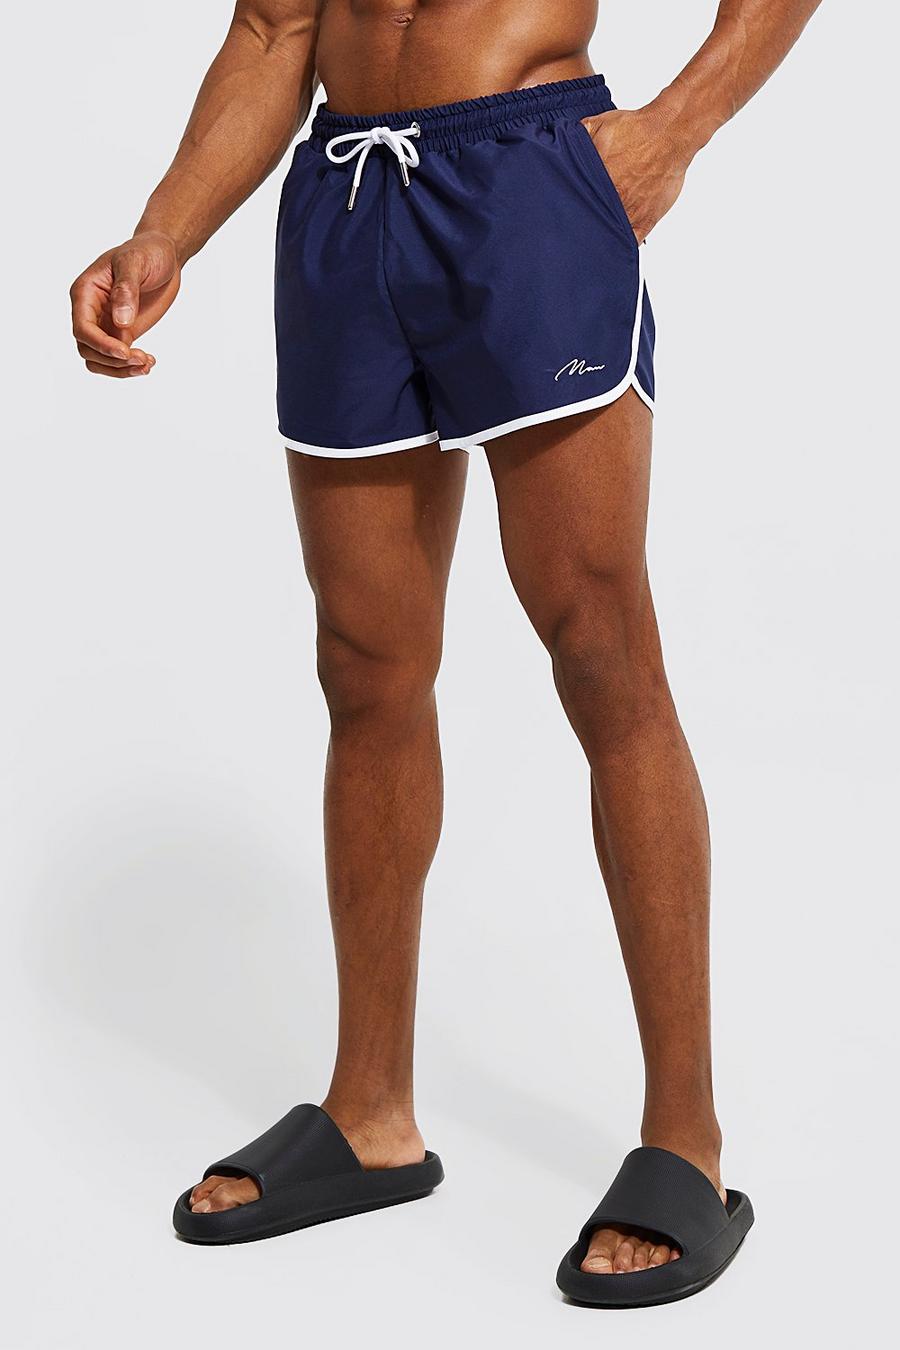 Navy שורט בגד ים בסגנון מכנסי ריצה עם חתימת Man מבד ממוחזר